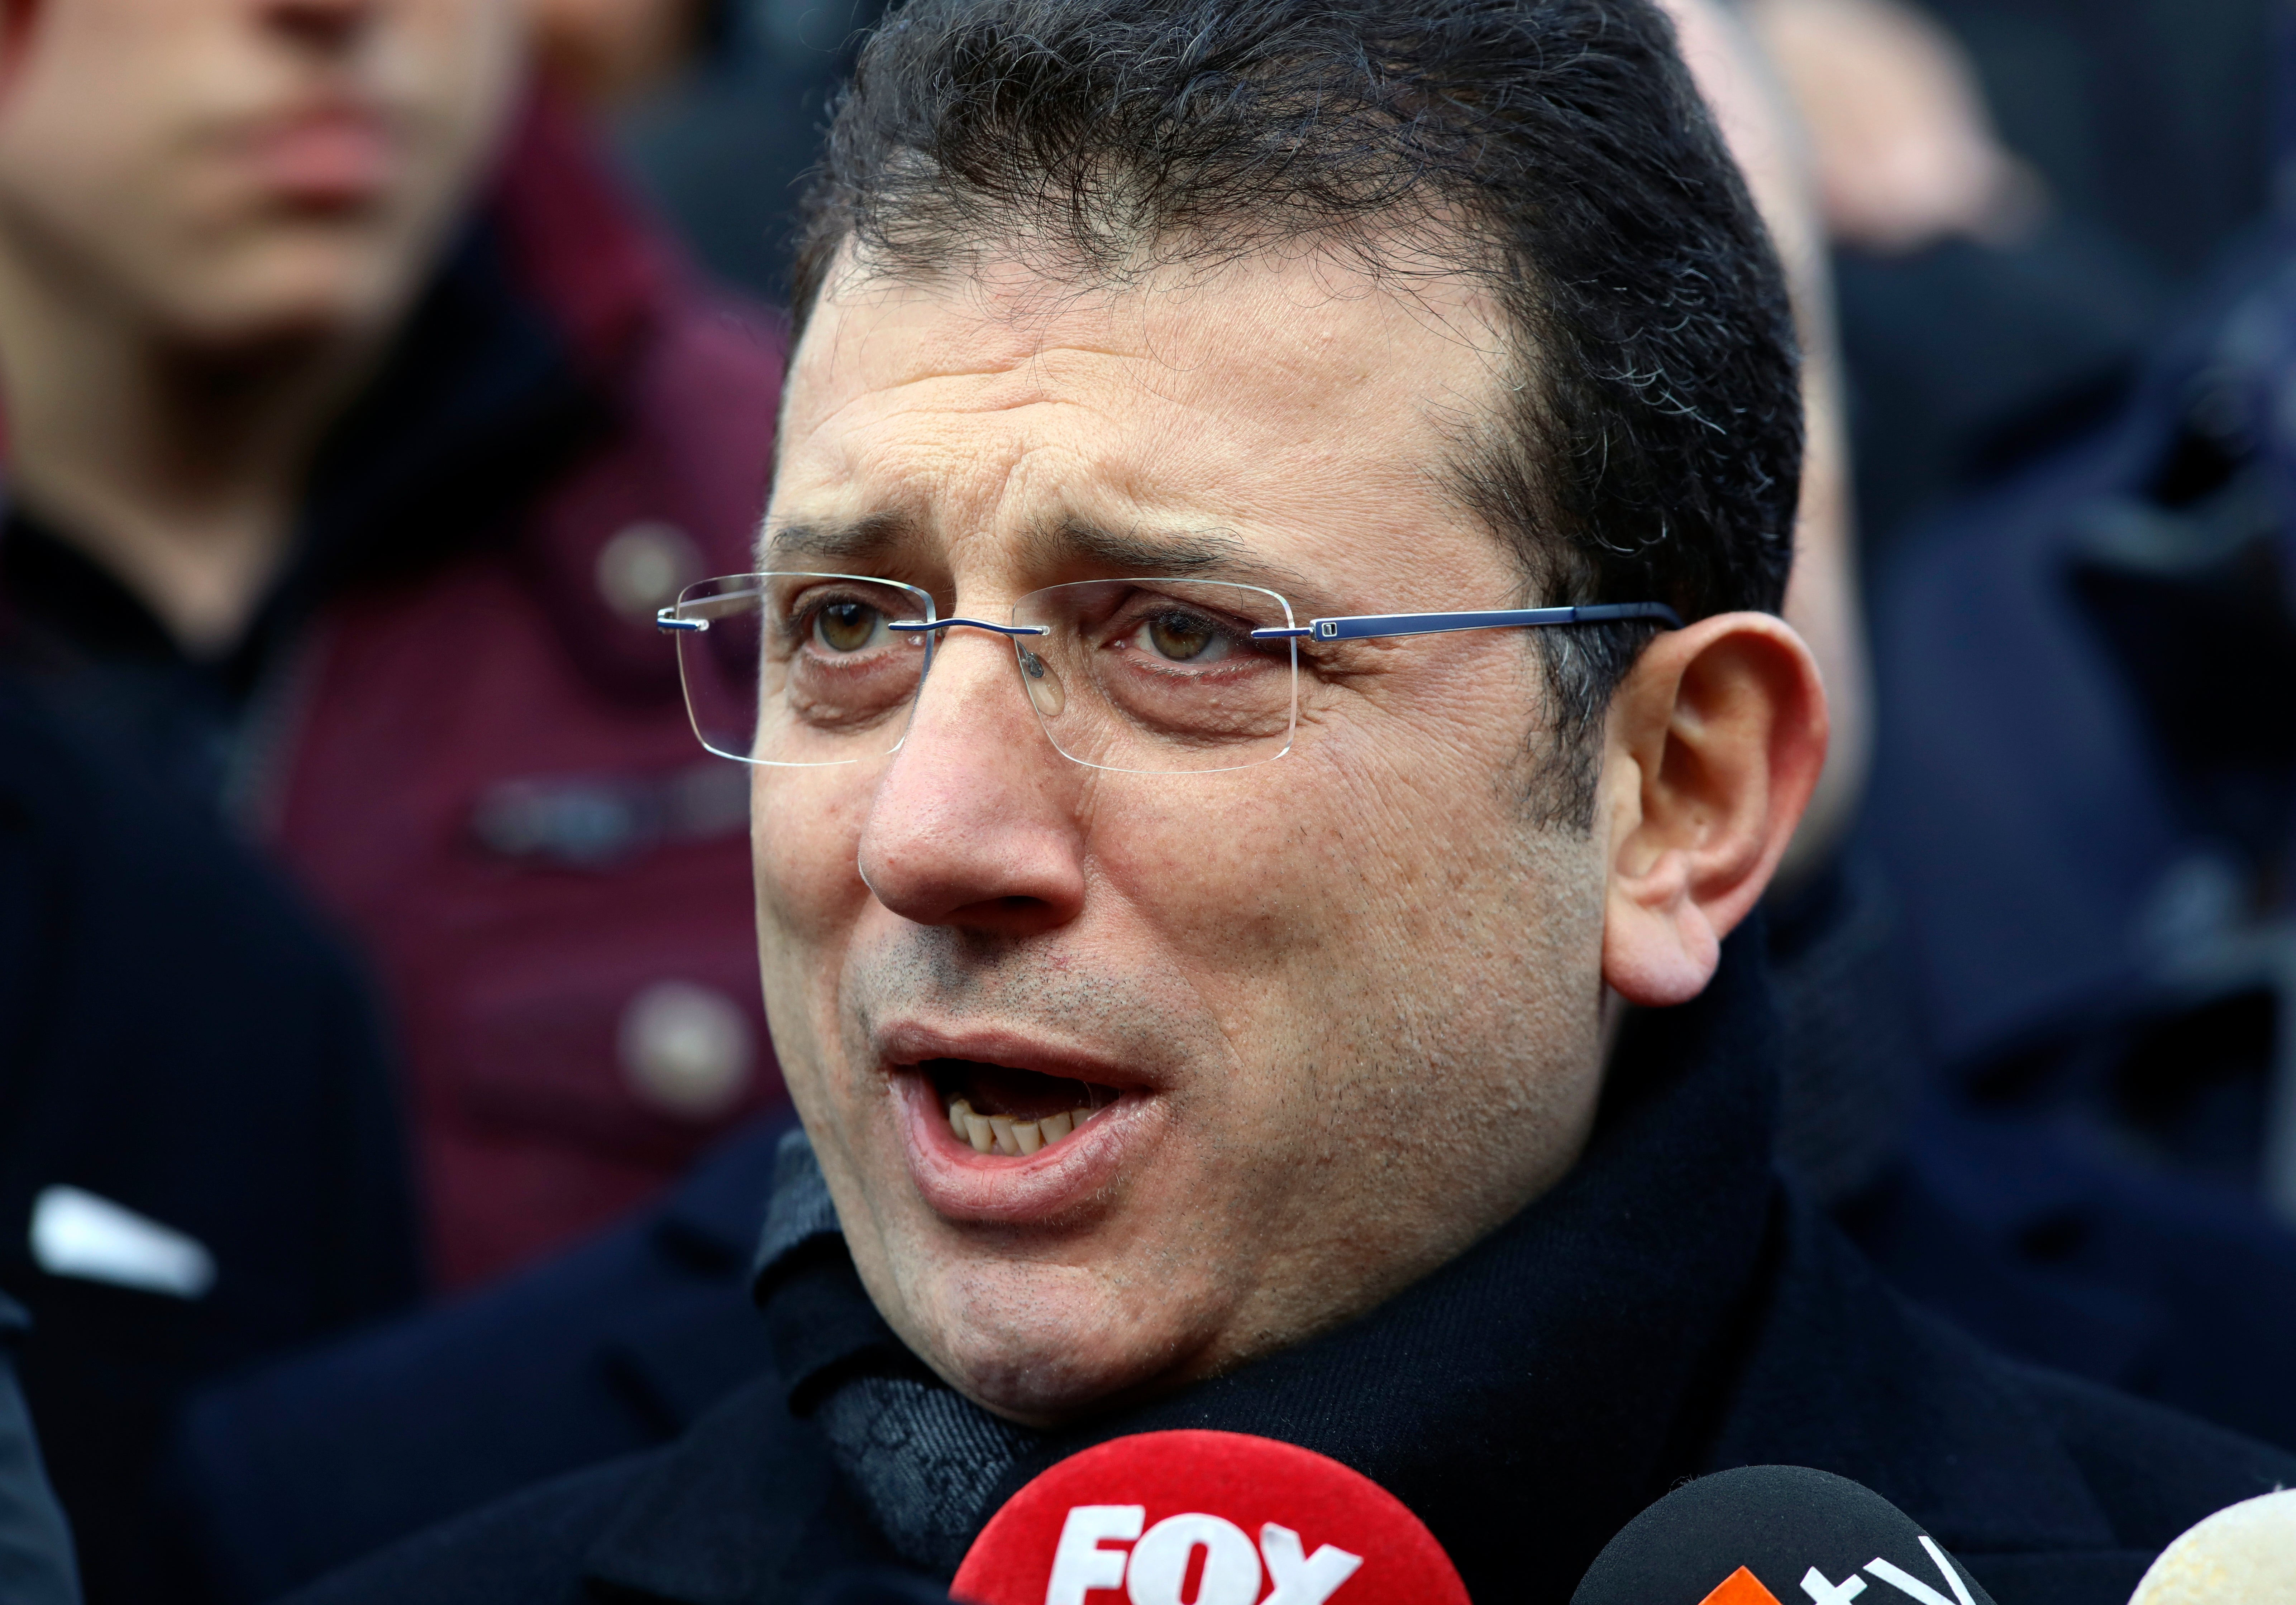 Turkey Mayor Convicted